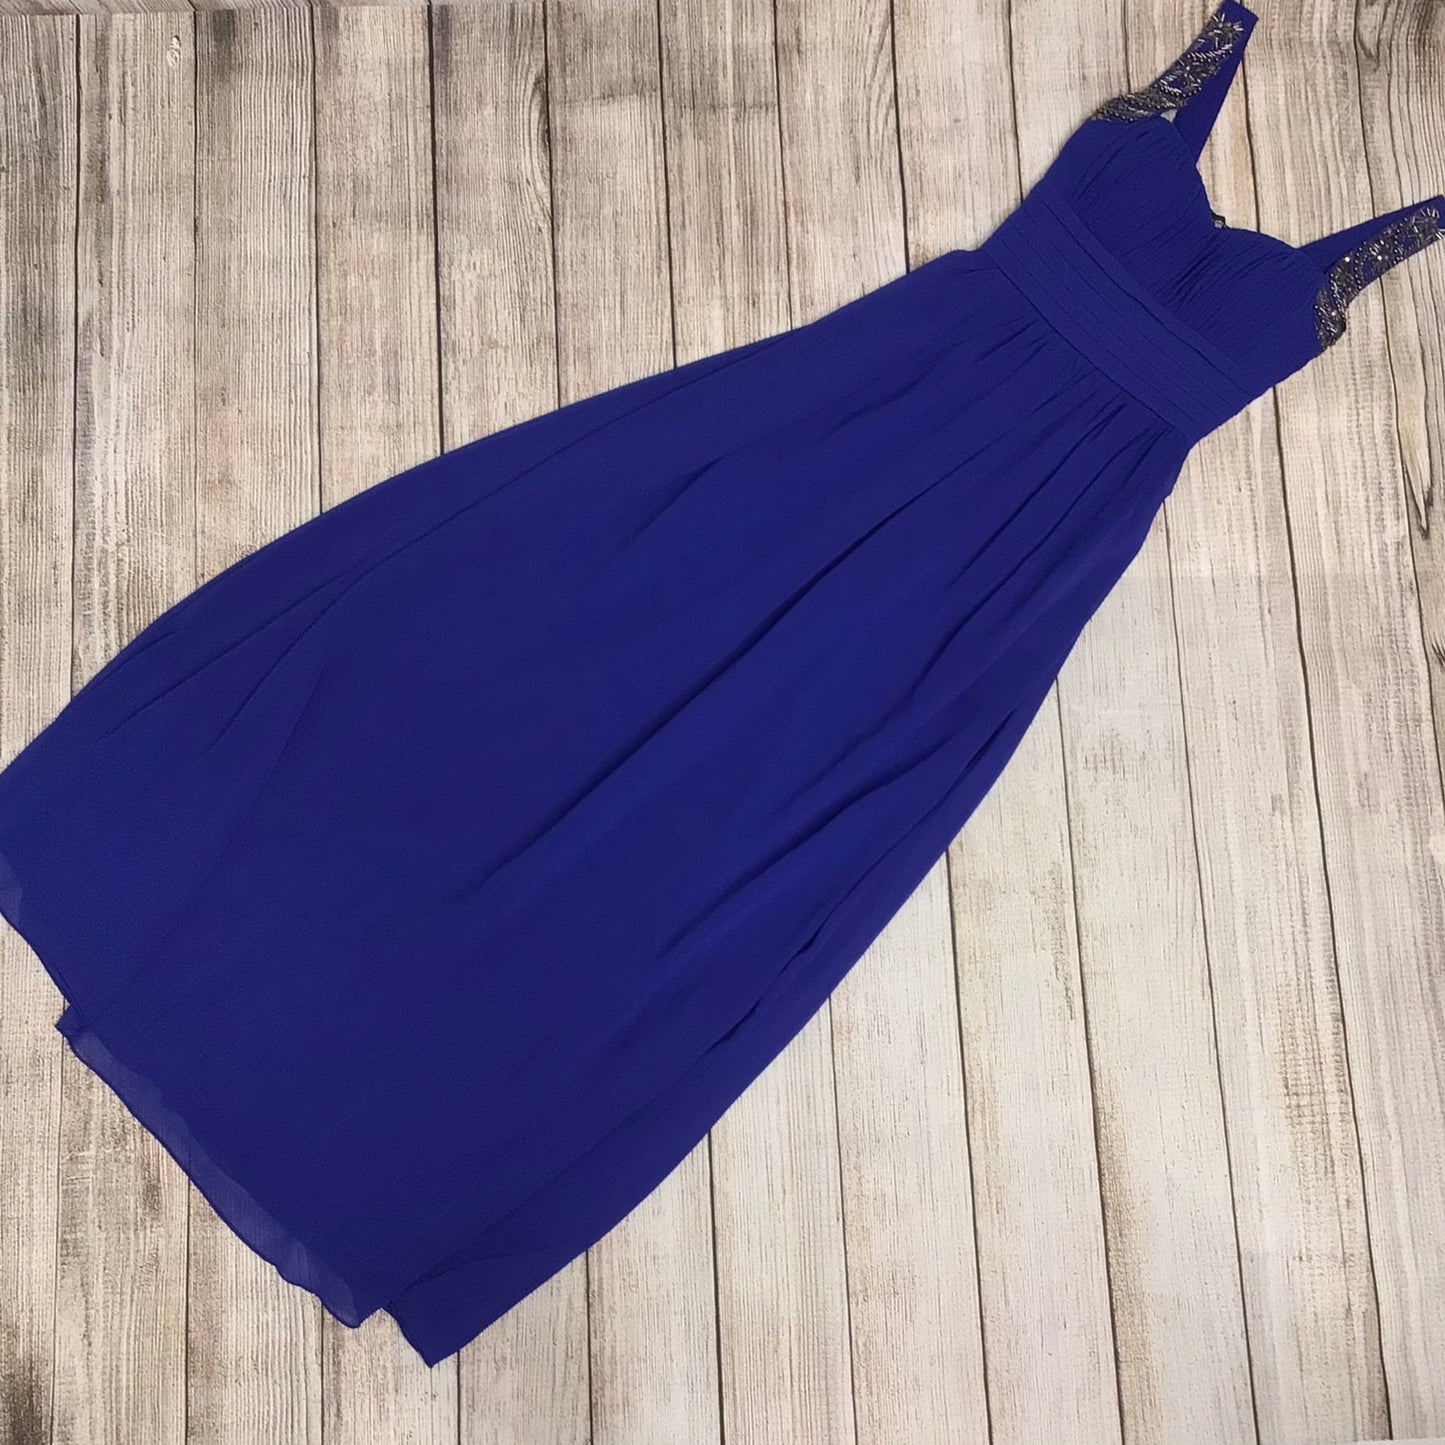 Little Mistress Royal Blue Long Dress w/Beaded Shoulder Detailing Size 8